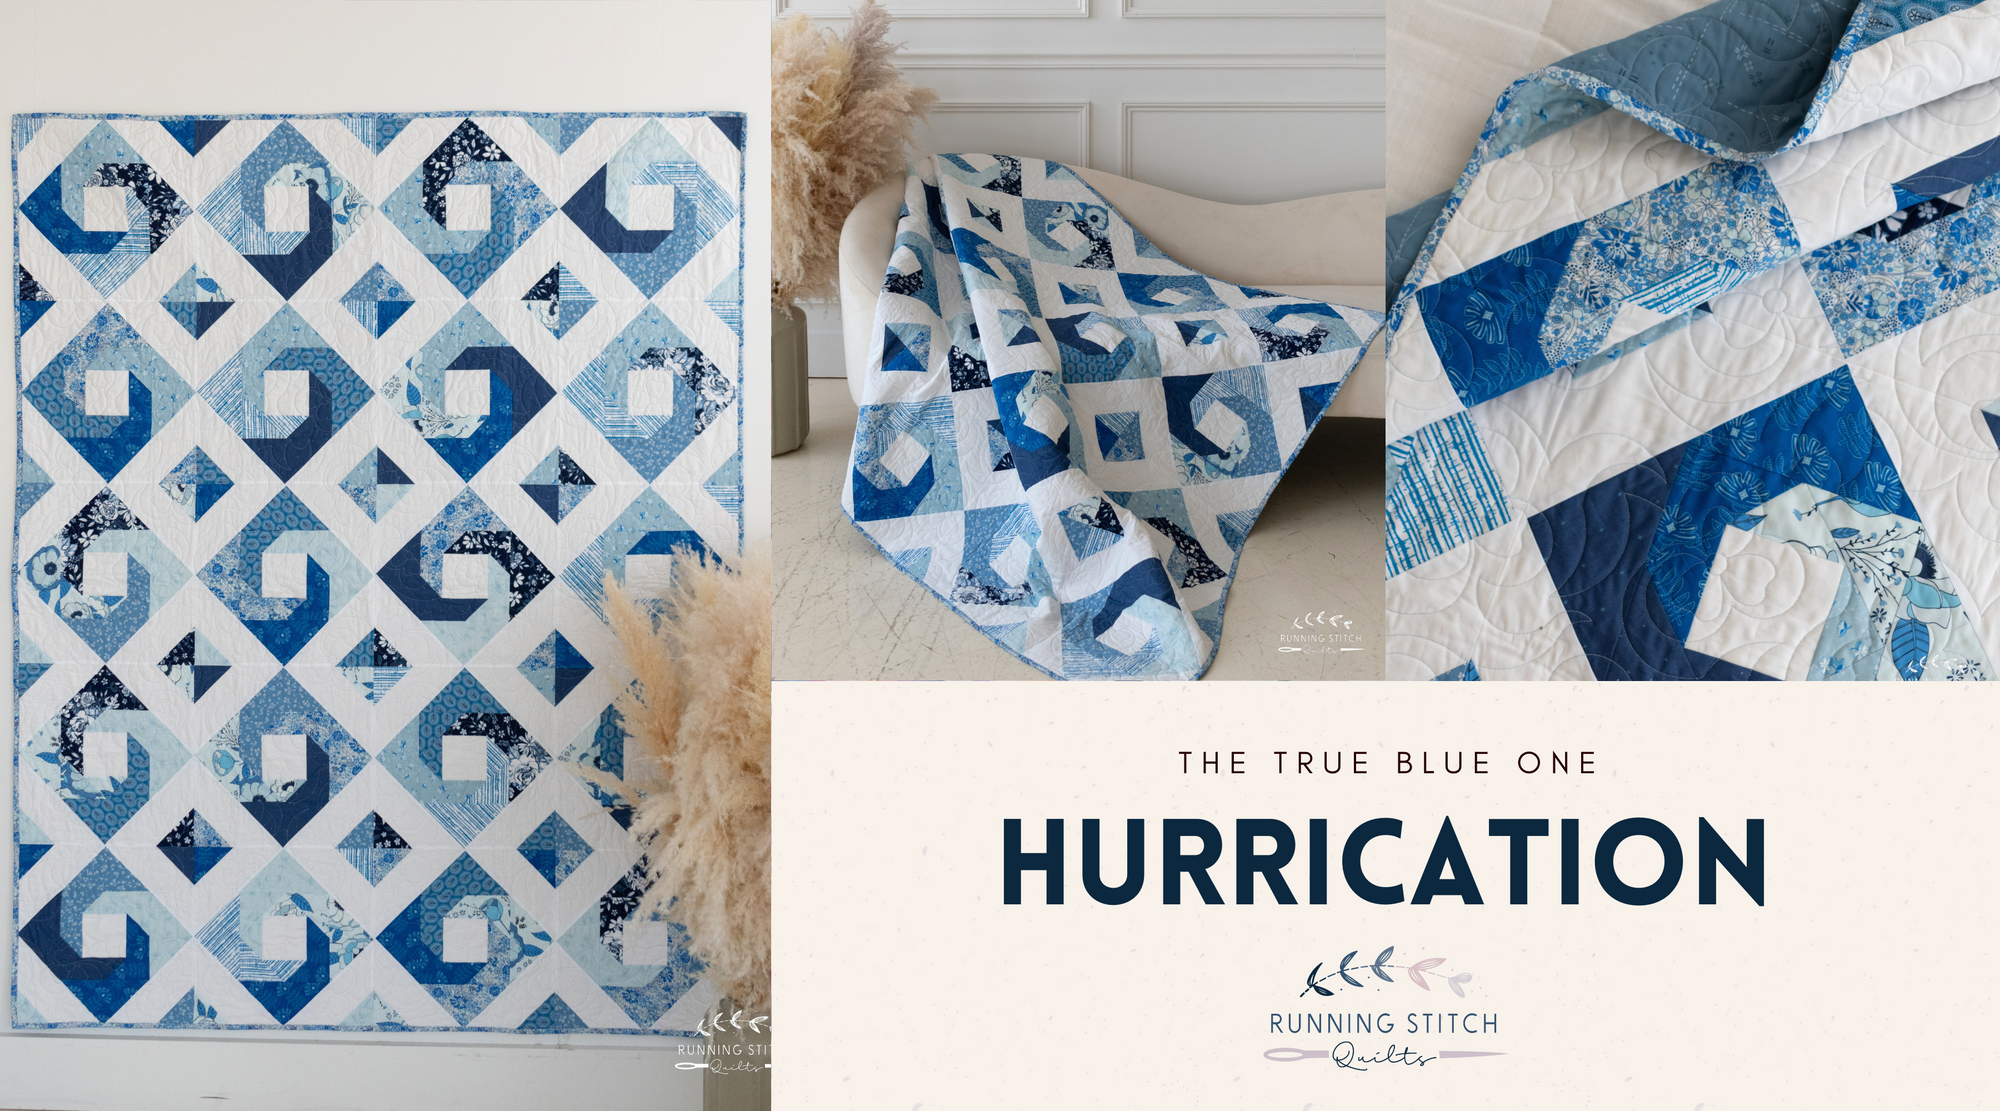 Hurrication - The True Blue One